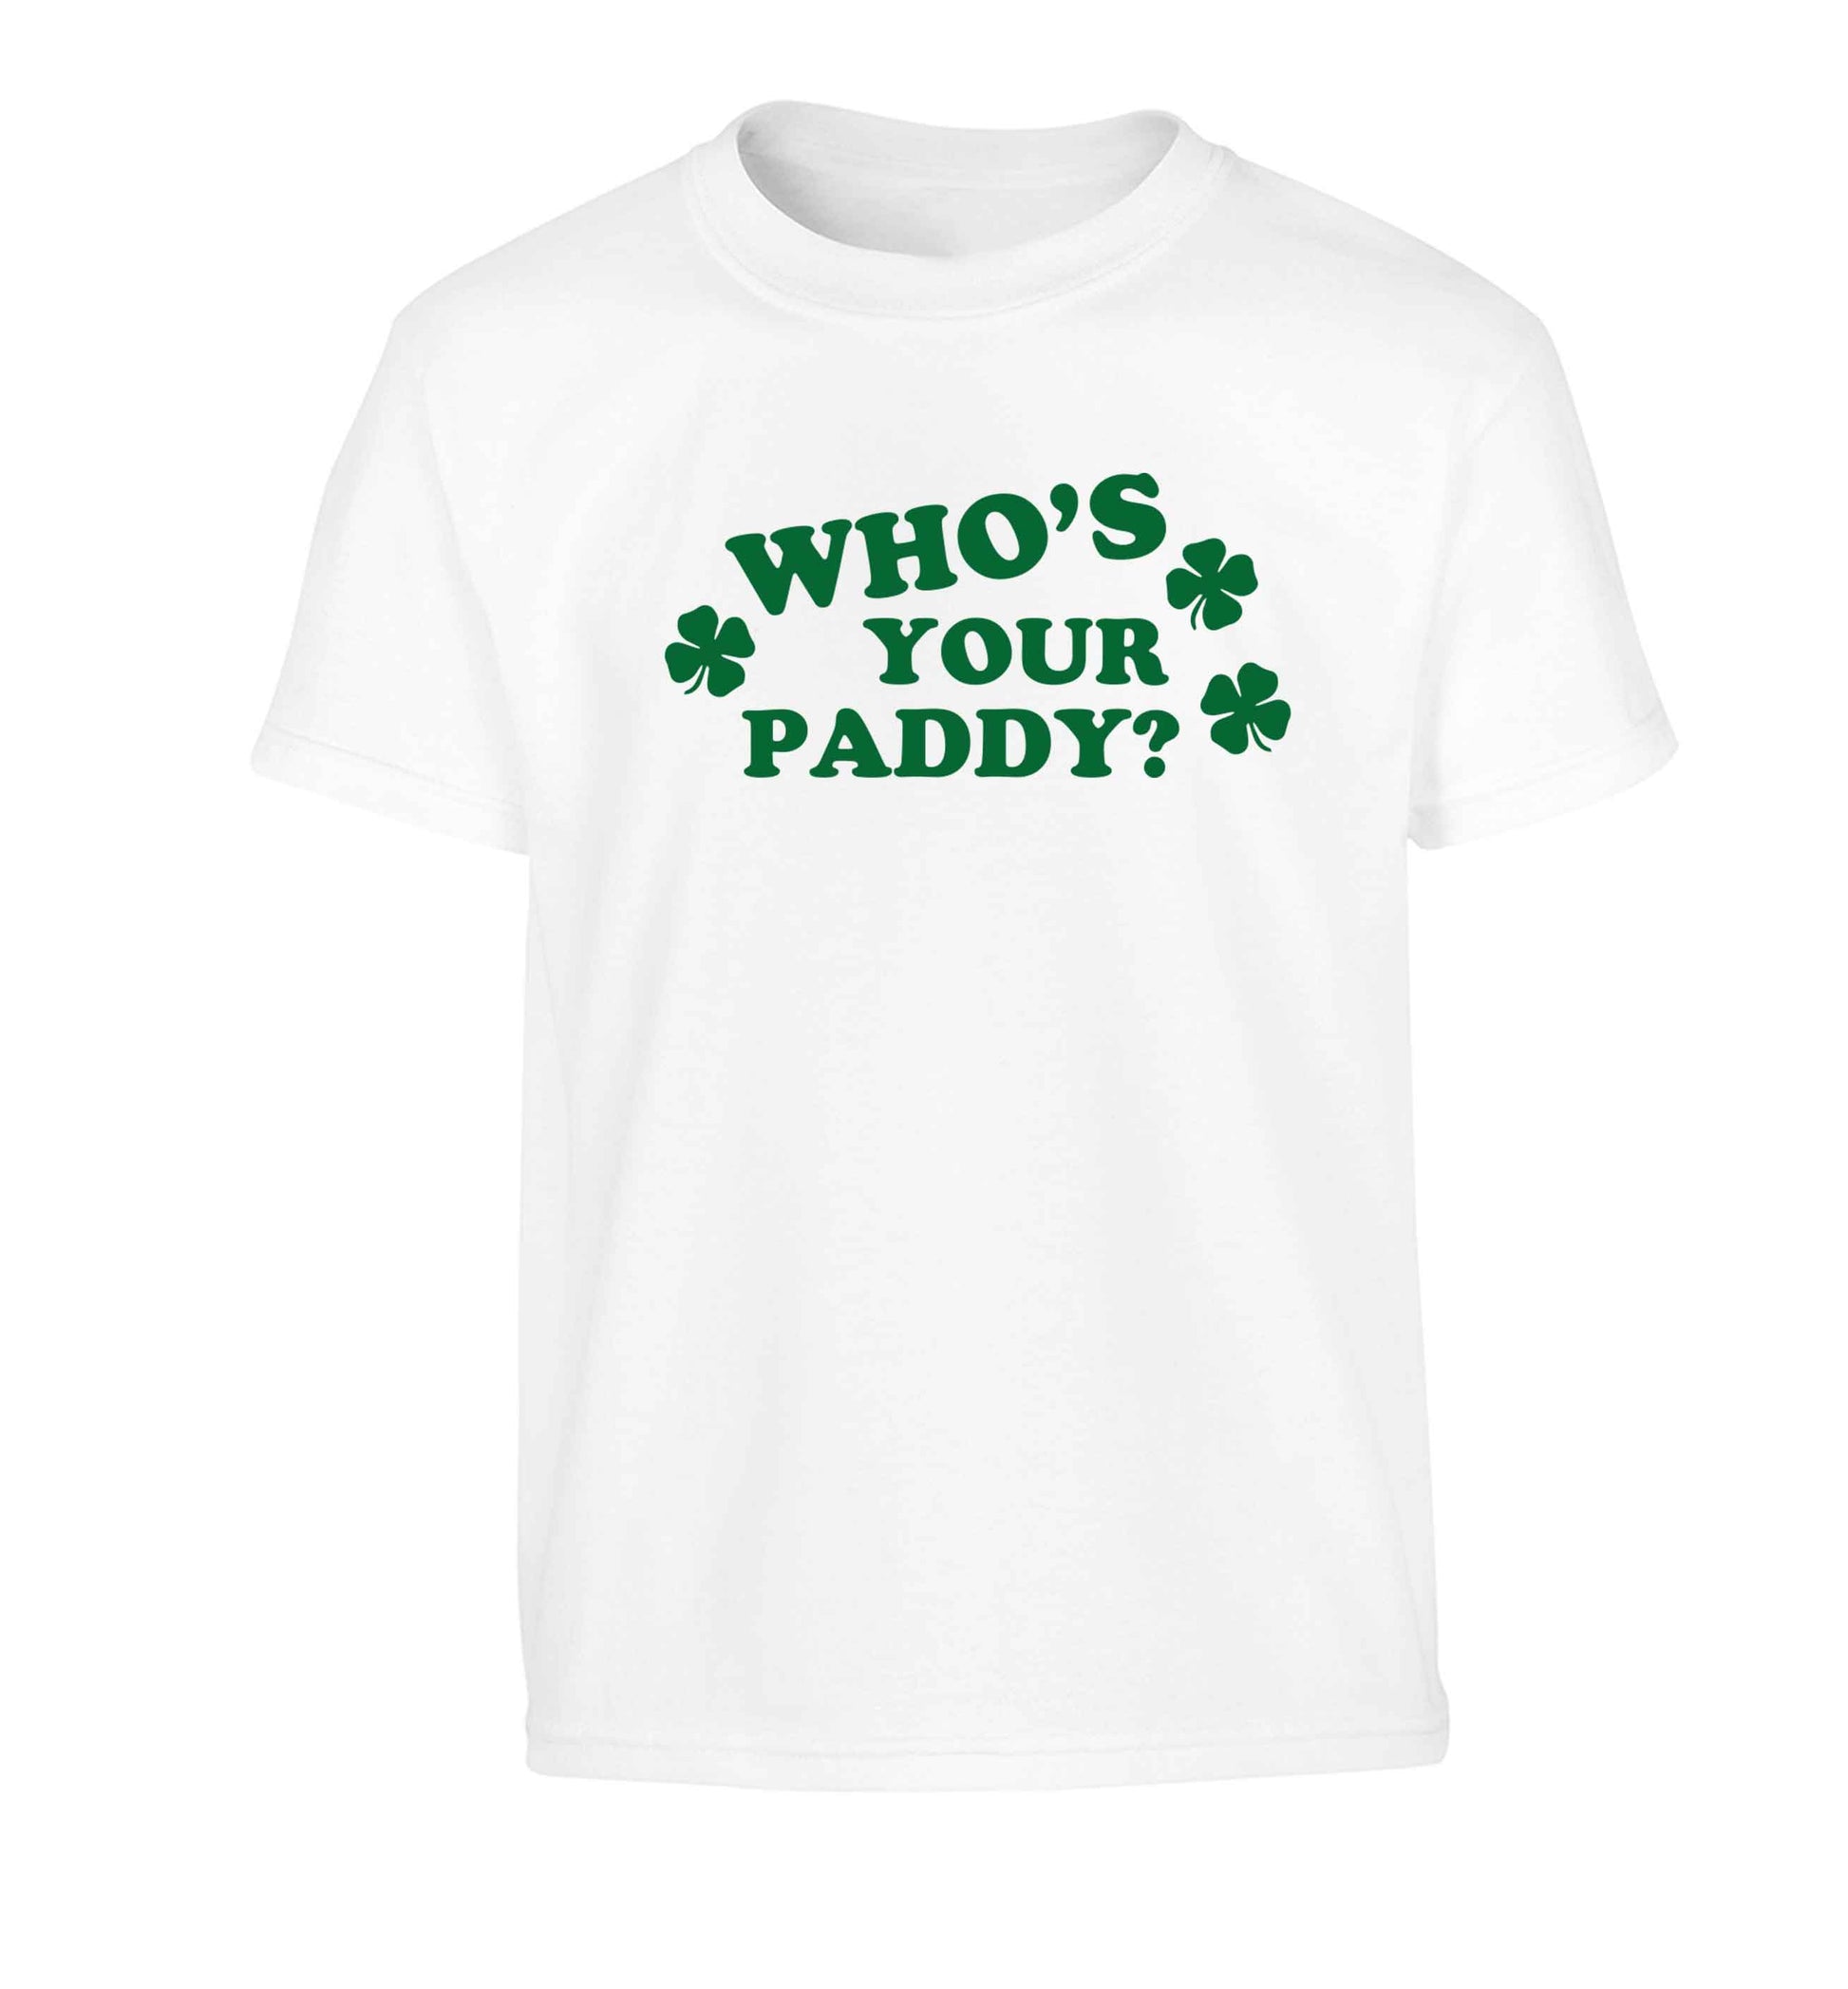 Who's your paddy? Children's white Tshirt 12-13 Years